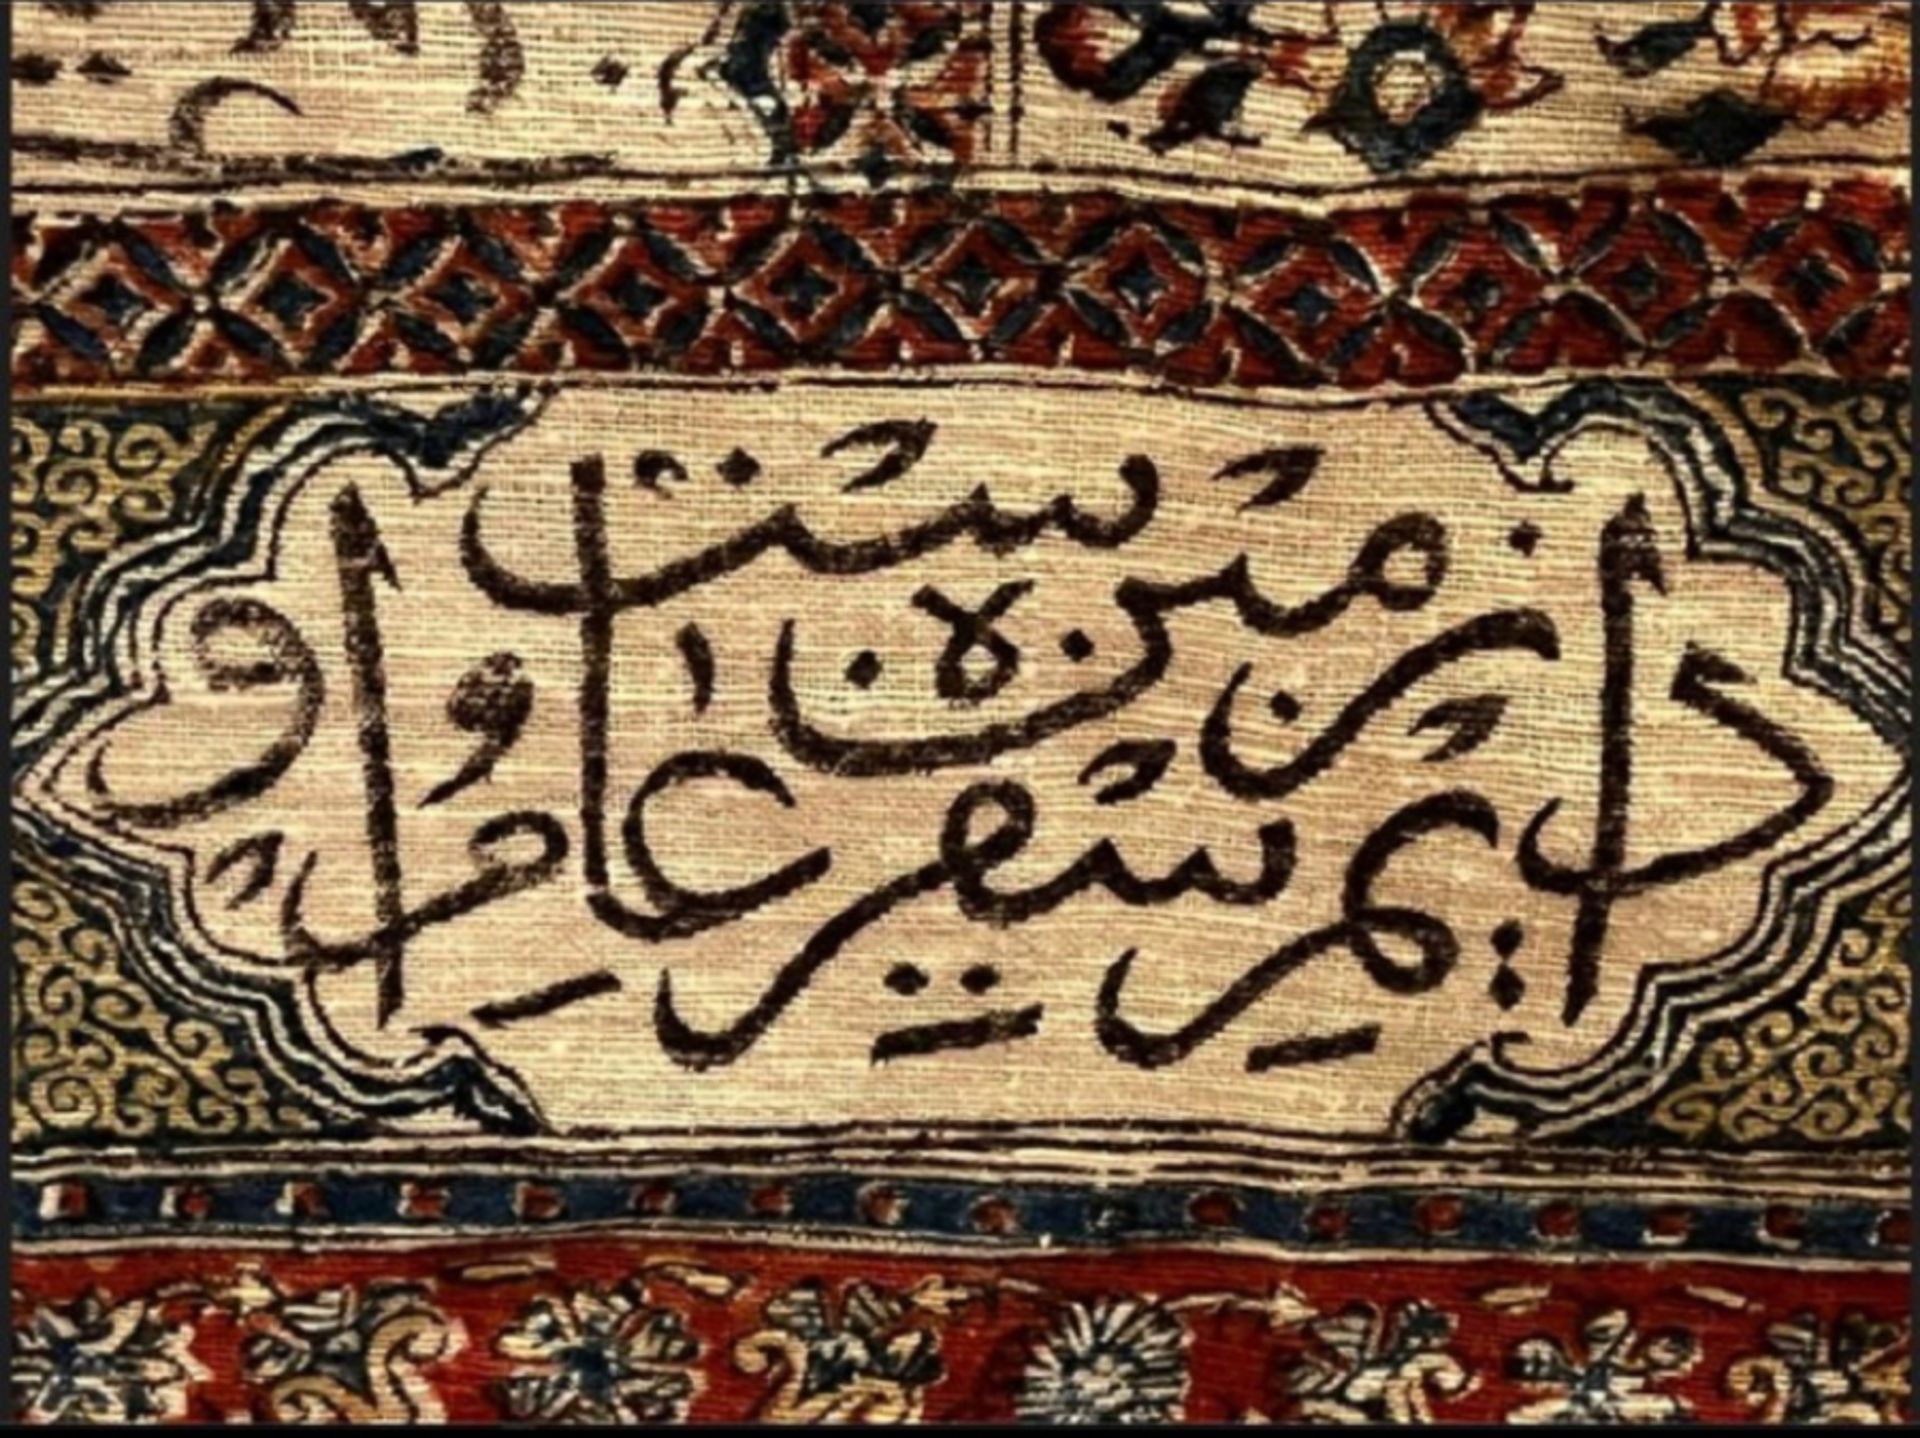 Kalamkari textile with islamic calligraphy - Image 7 of 12